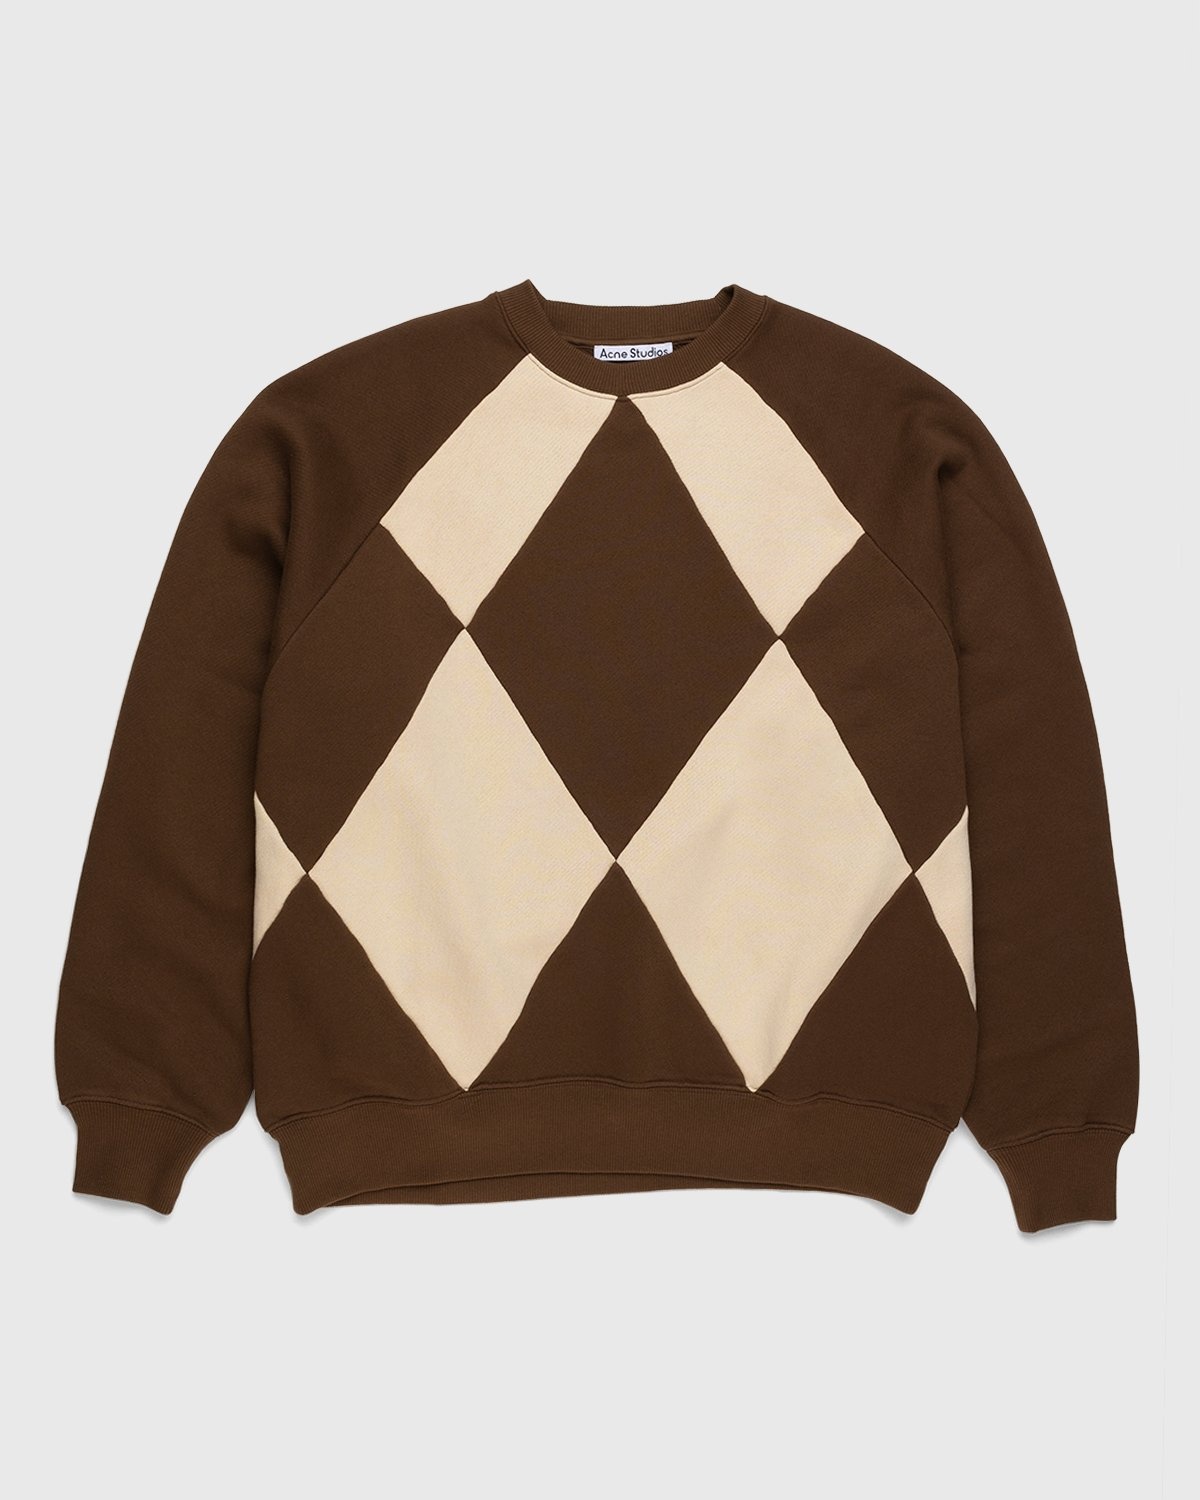 Acne Studios – Sweater Brown - Knitwear - Brown - Image 1